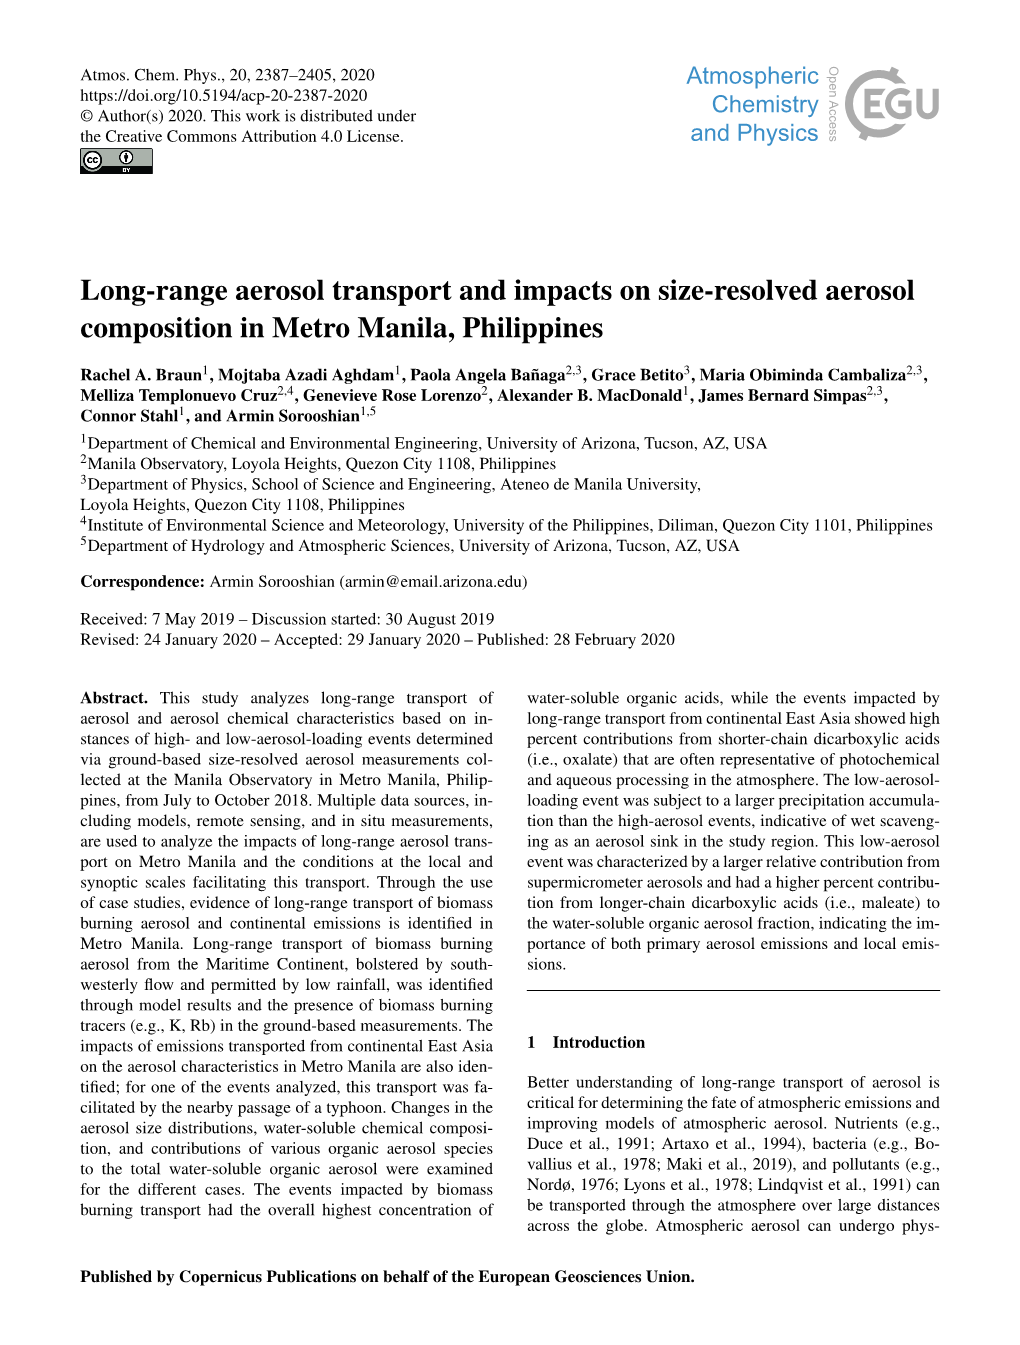 Long-Range Aerosol Transport and Impacts on Size-Resolved Aerosol Composition in Metro Manila, Philippines